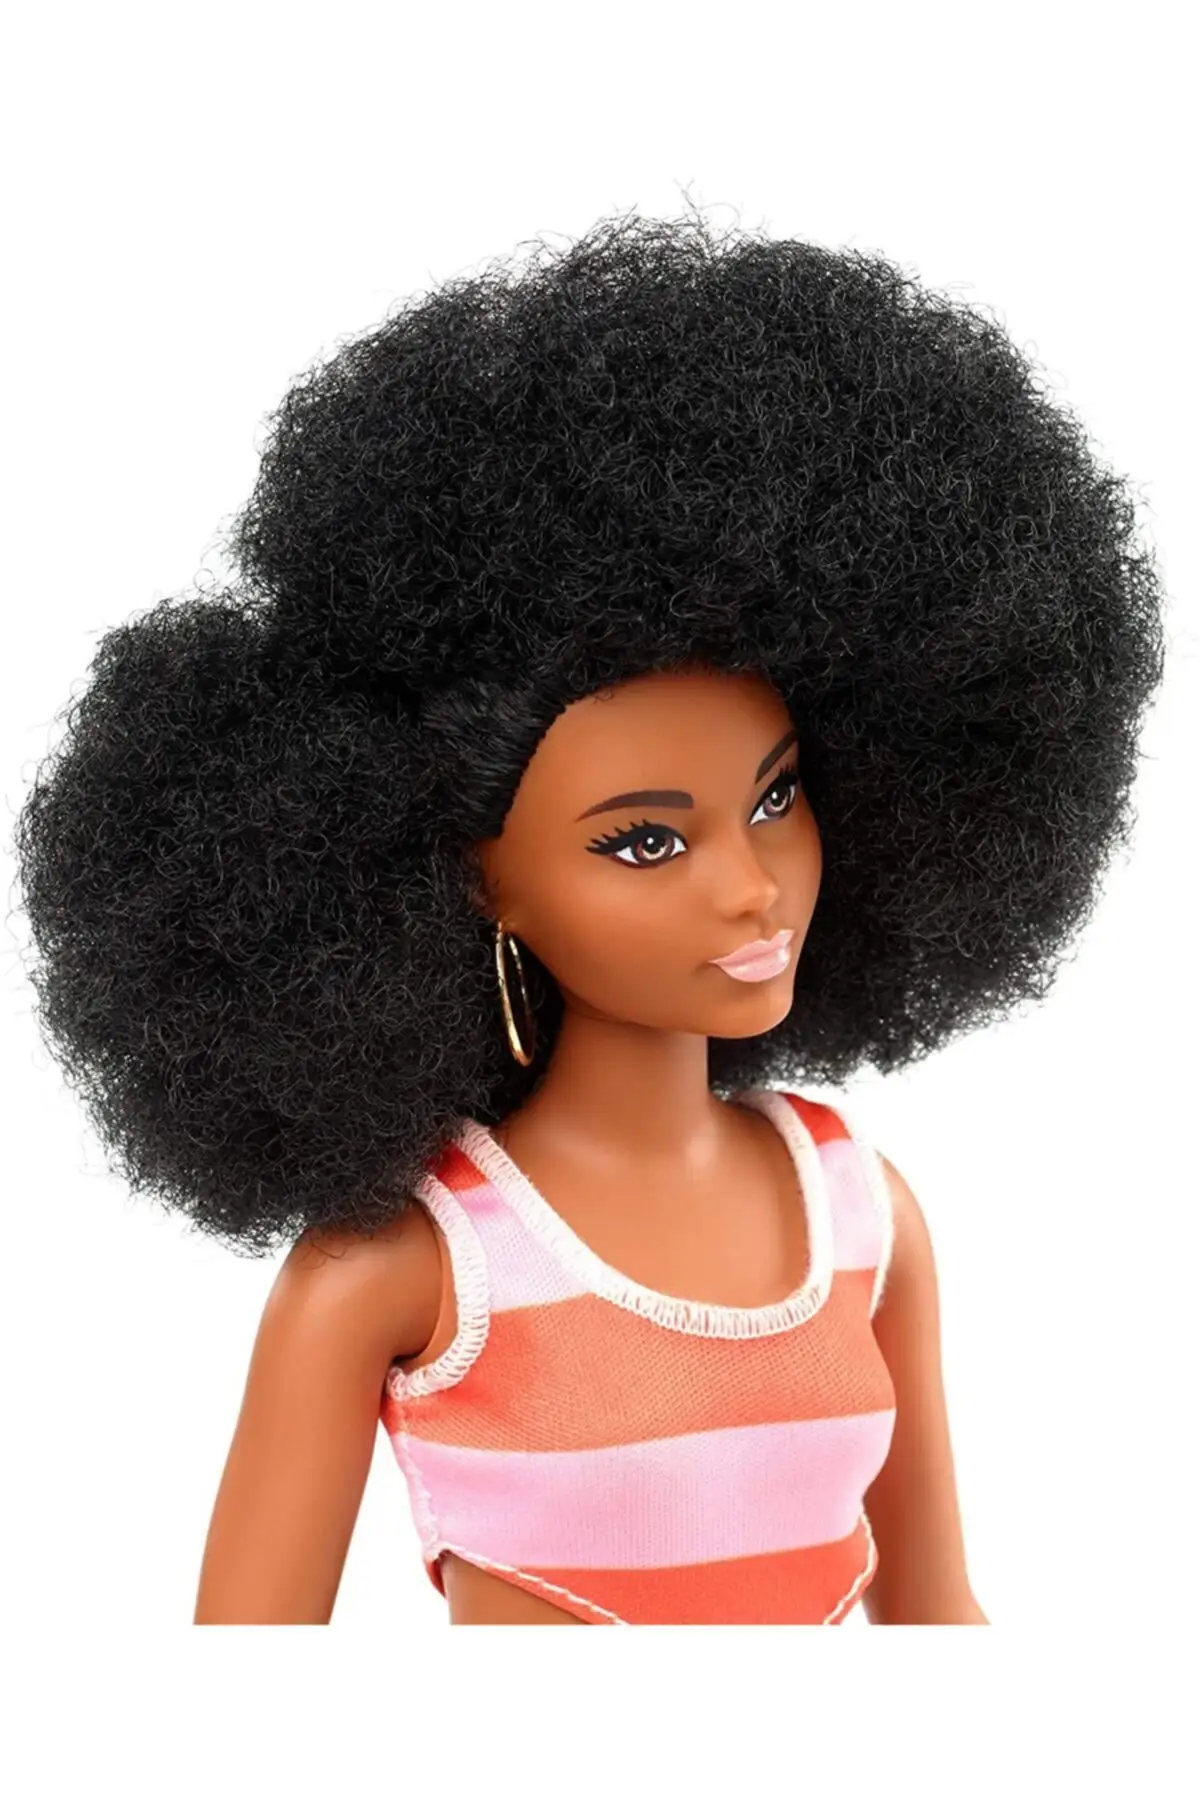 Темнокожая кукла. Барби фашионистас афро. Барби Fashionistas 105. Барби фашионистас чернокожая. Кукла Барби фашионистас афро.